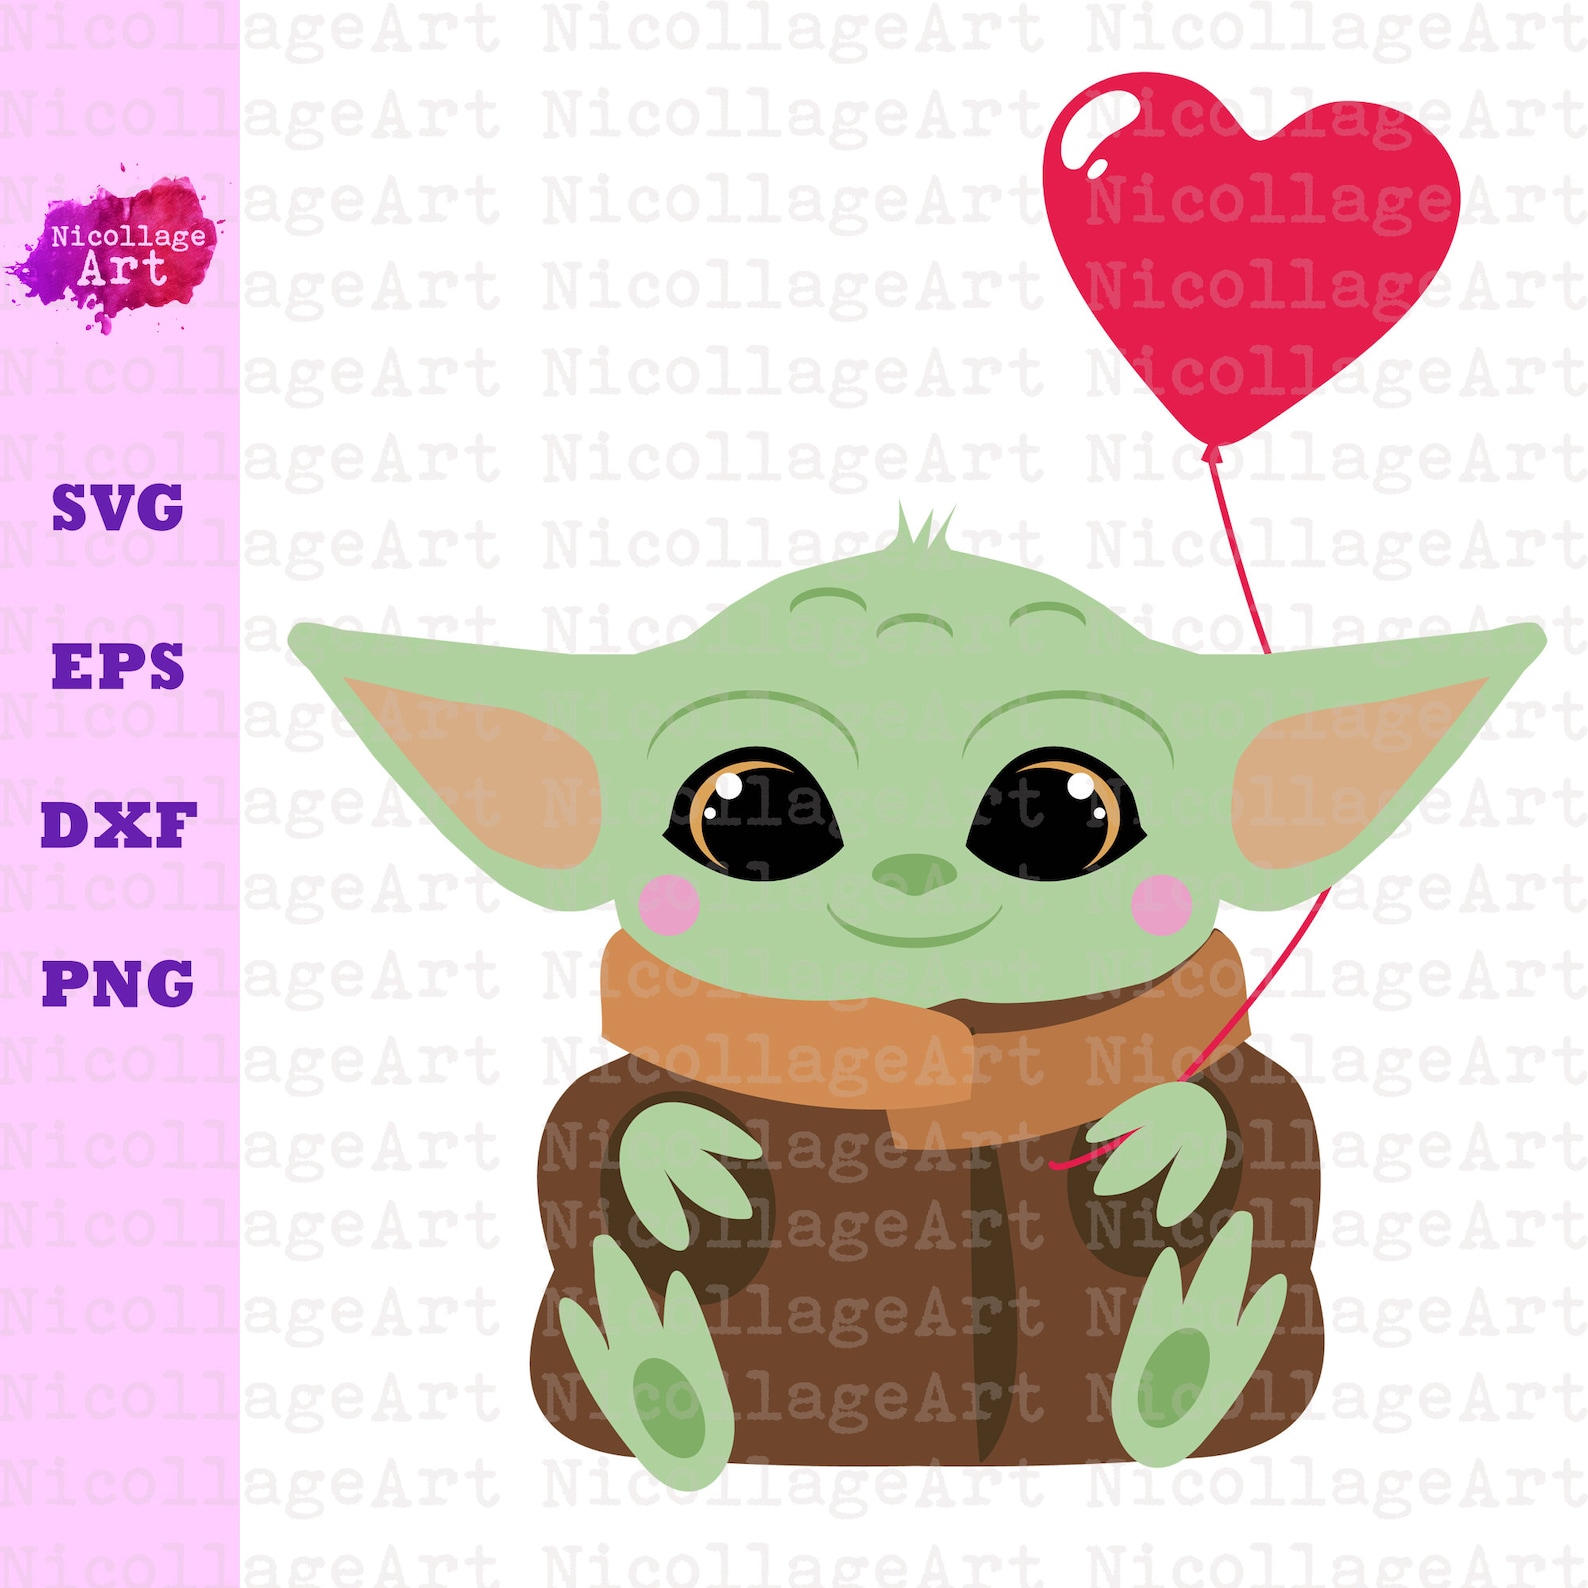 Baby Yoda SVG Baby Yoda Holding A Red Heart Balloon Cut File Etsy